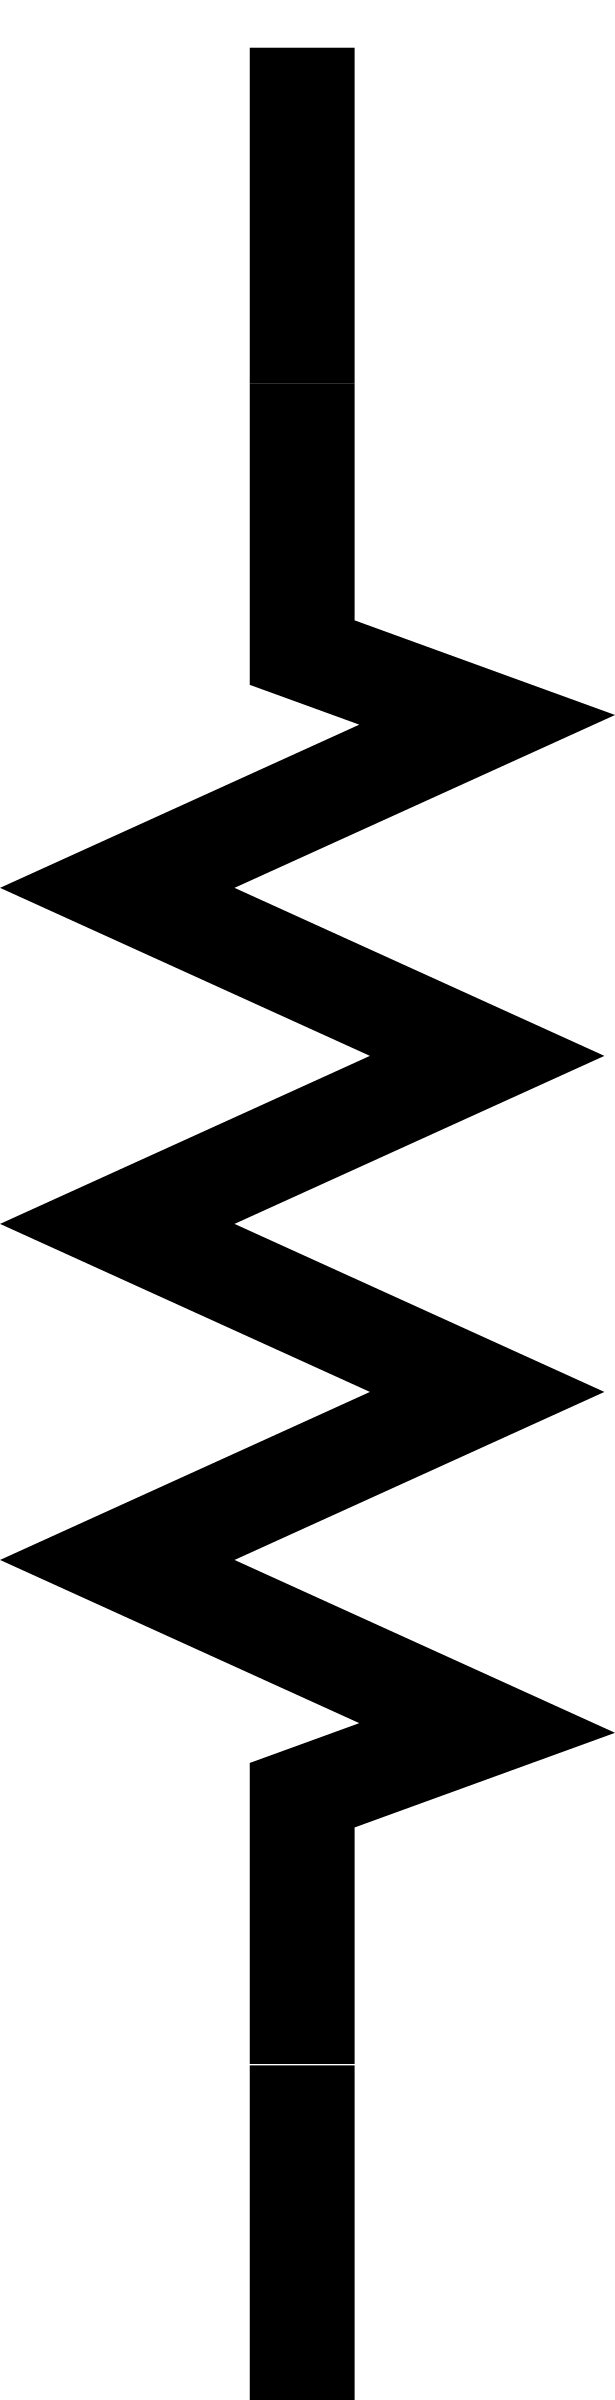 Schematic Symbol For Resistor.